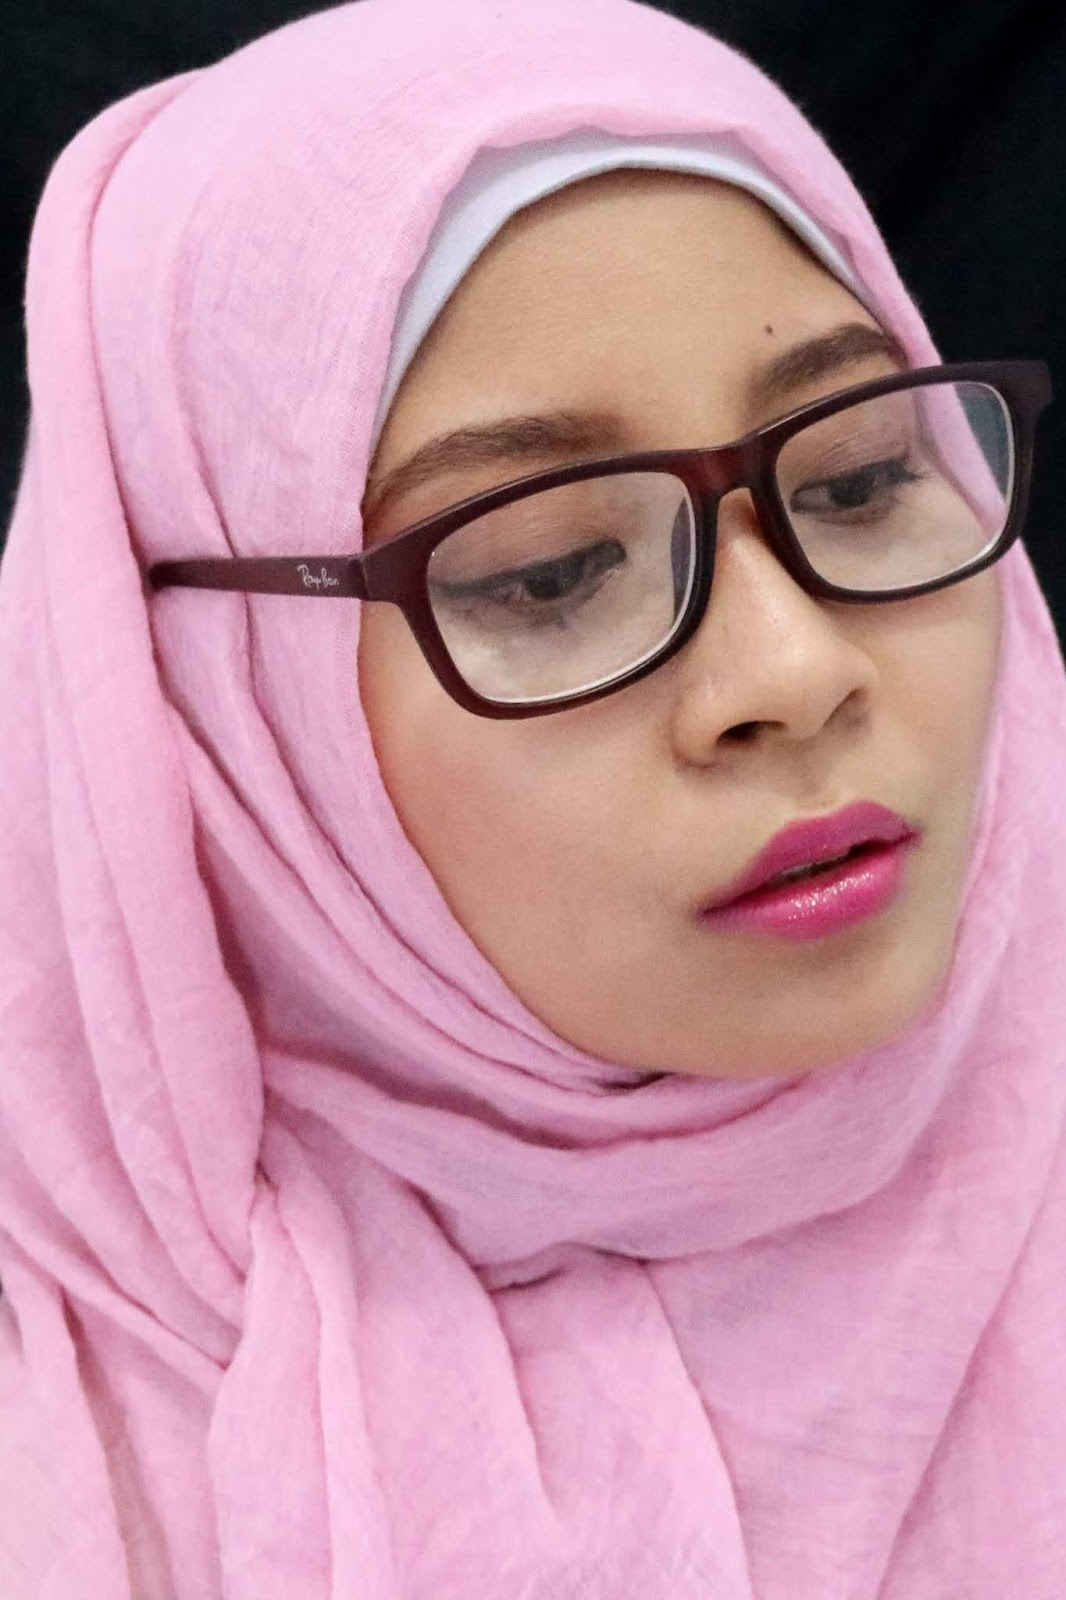 Kumpulan Foto Cewek Igo Hijab Selfie Yang Cantik Dan Manis